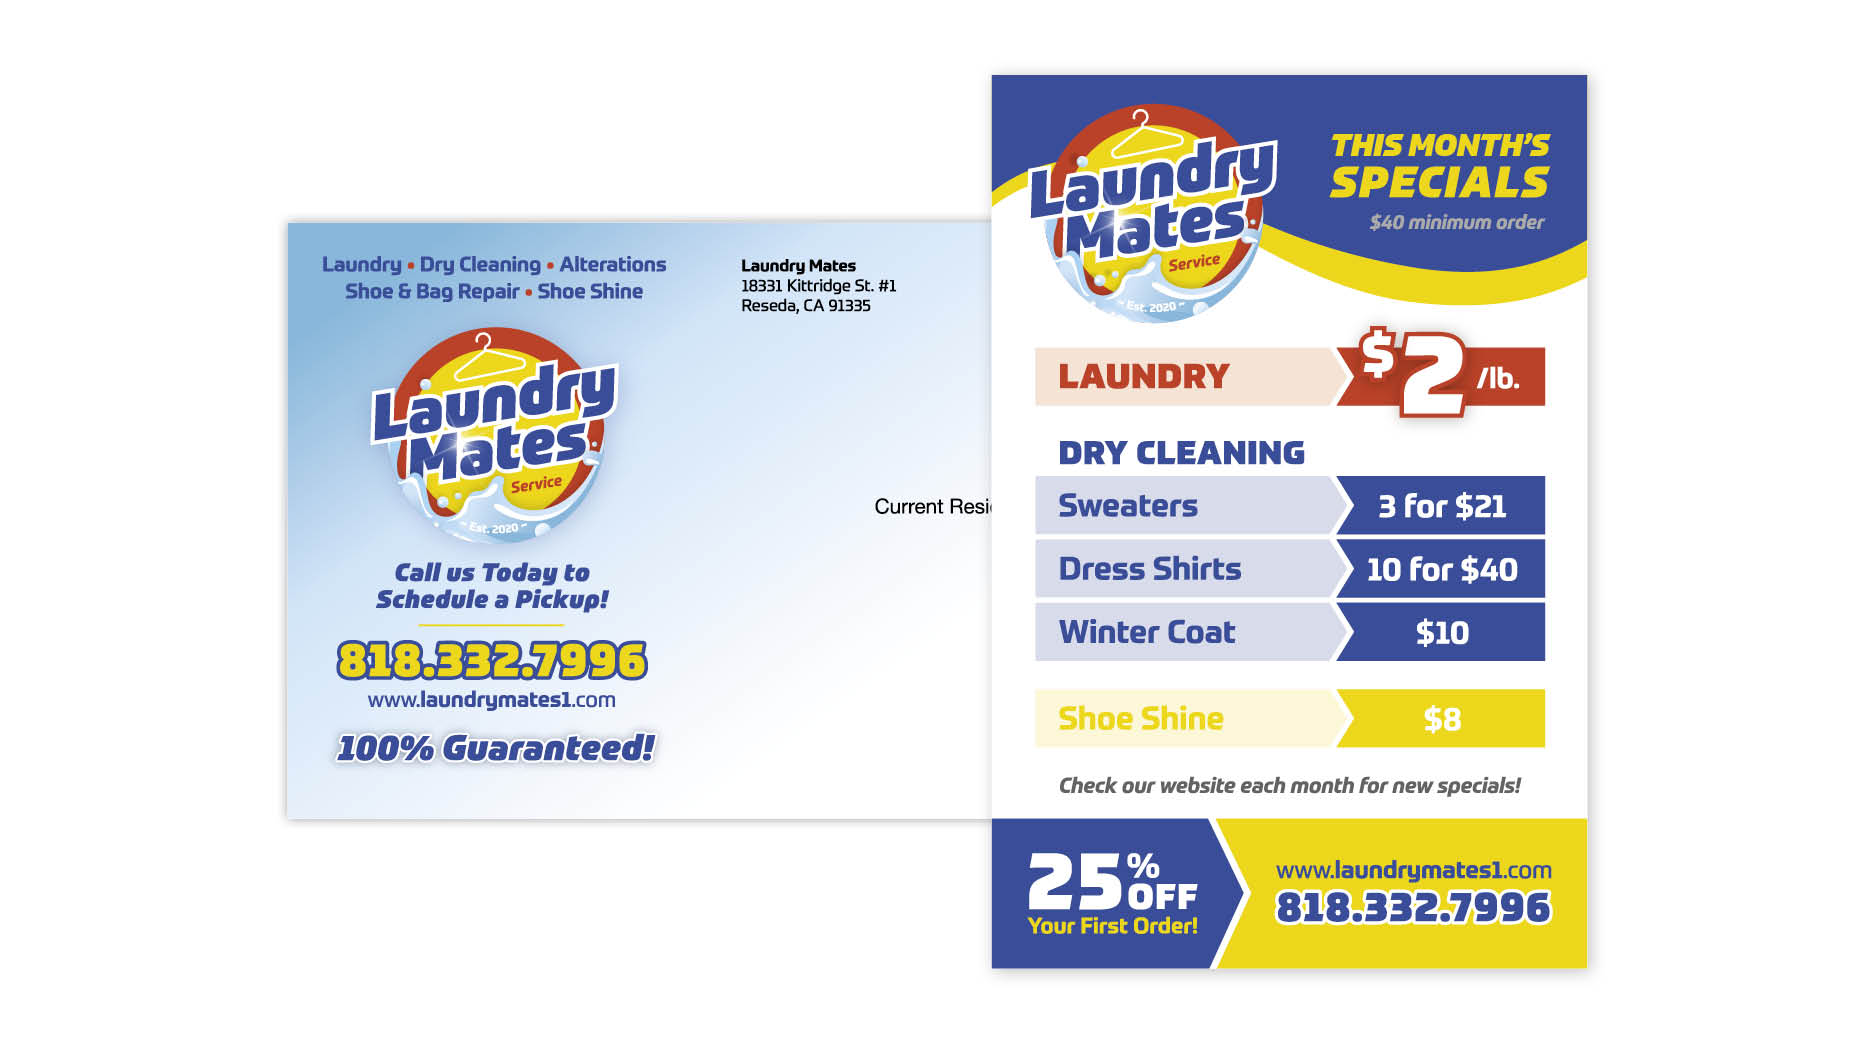 Laundry Mates | Postcard (Mail)